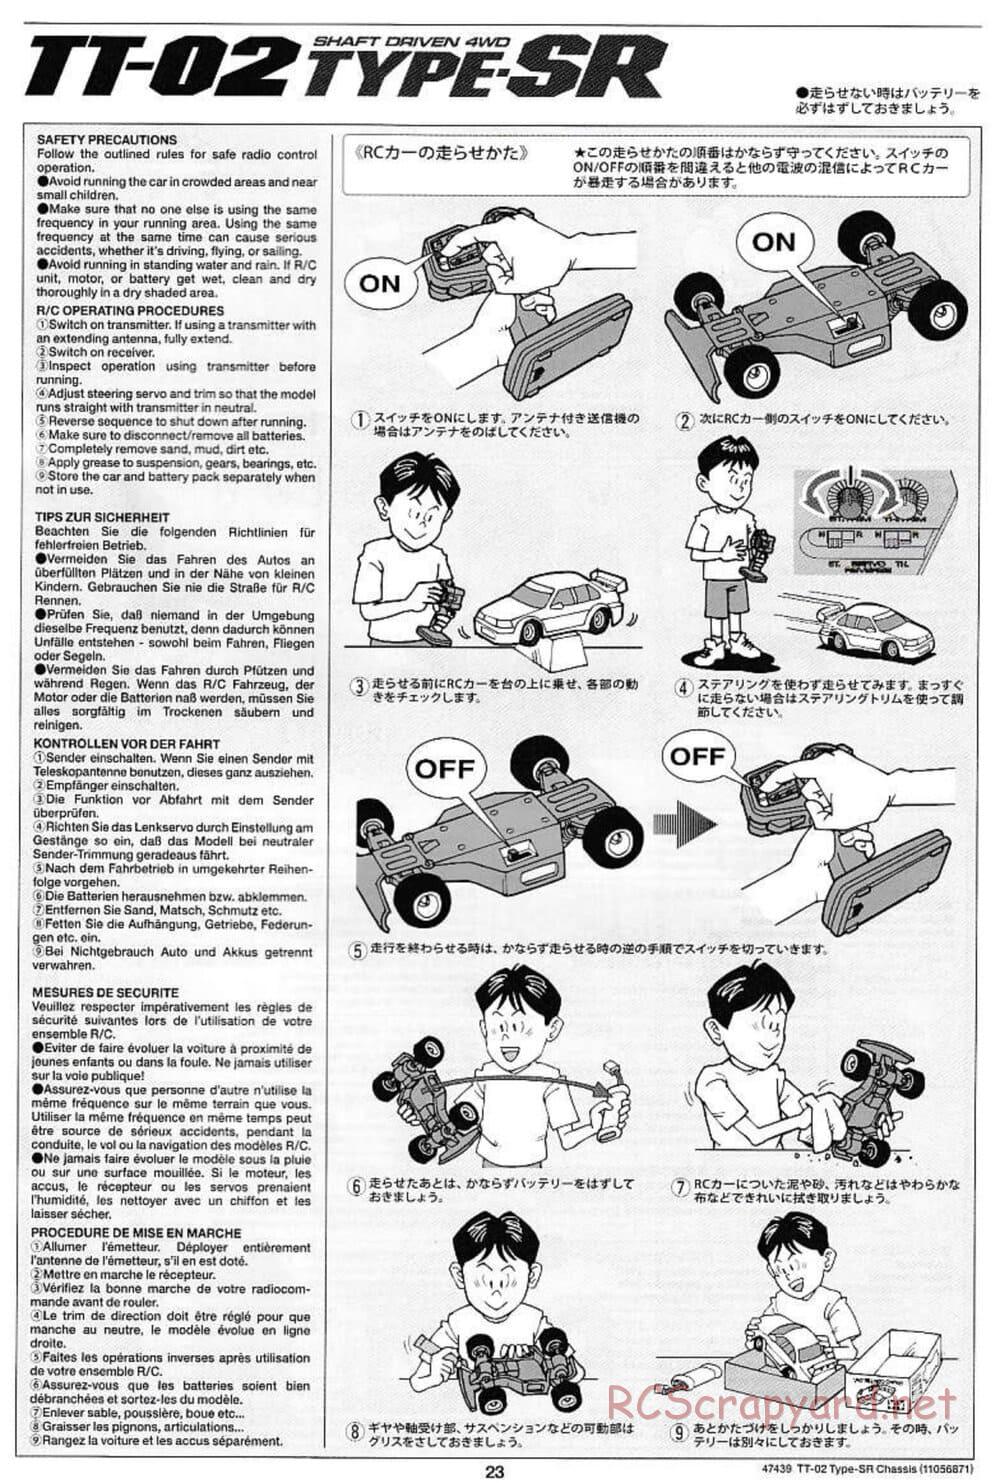 Tamiya - TT-02 Type-SR Chassis - Manual - Page 23